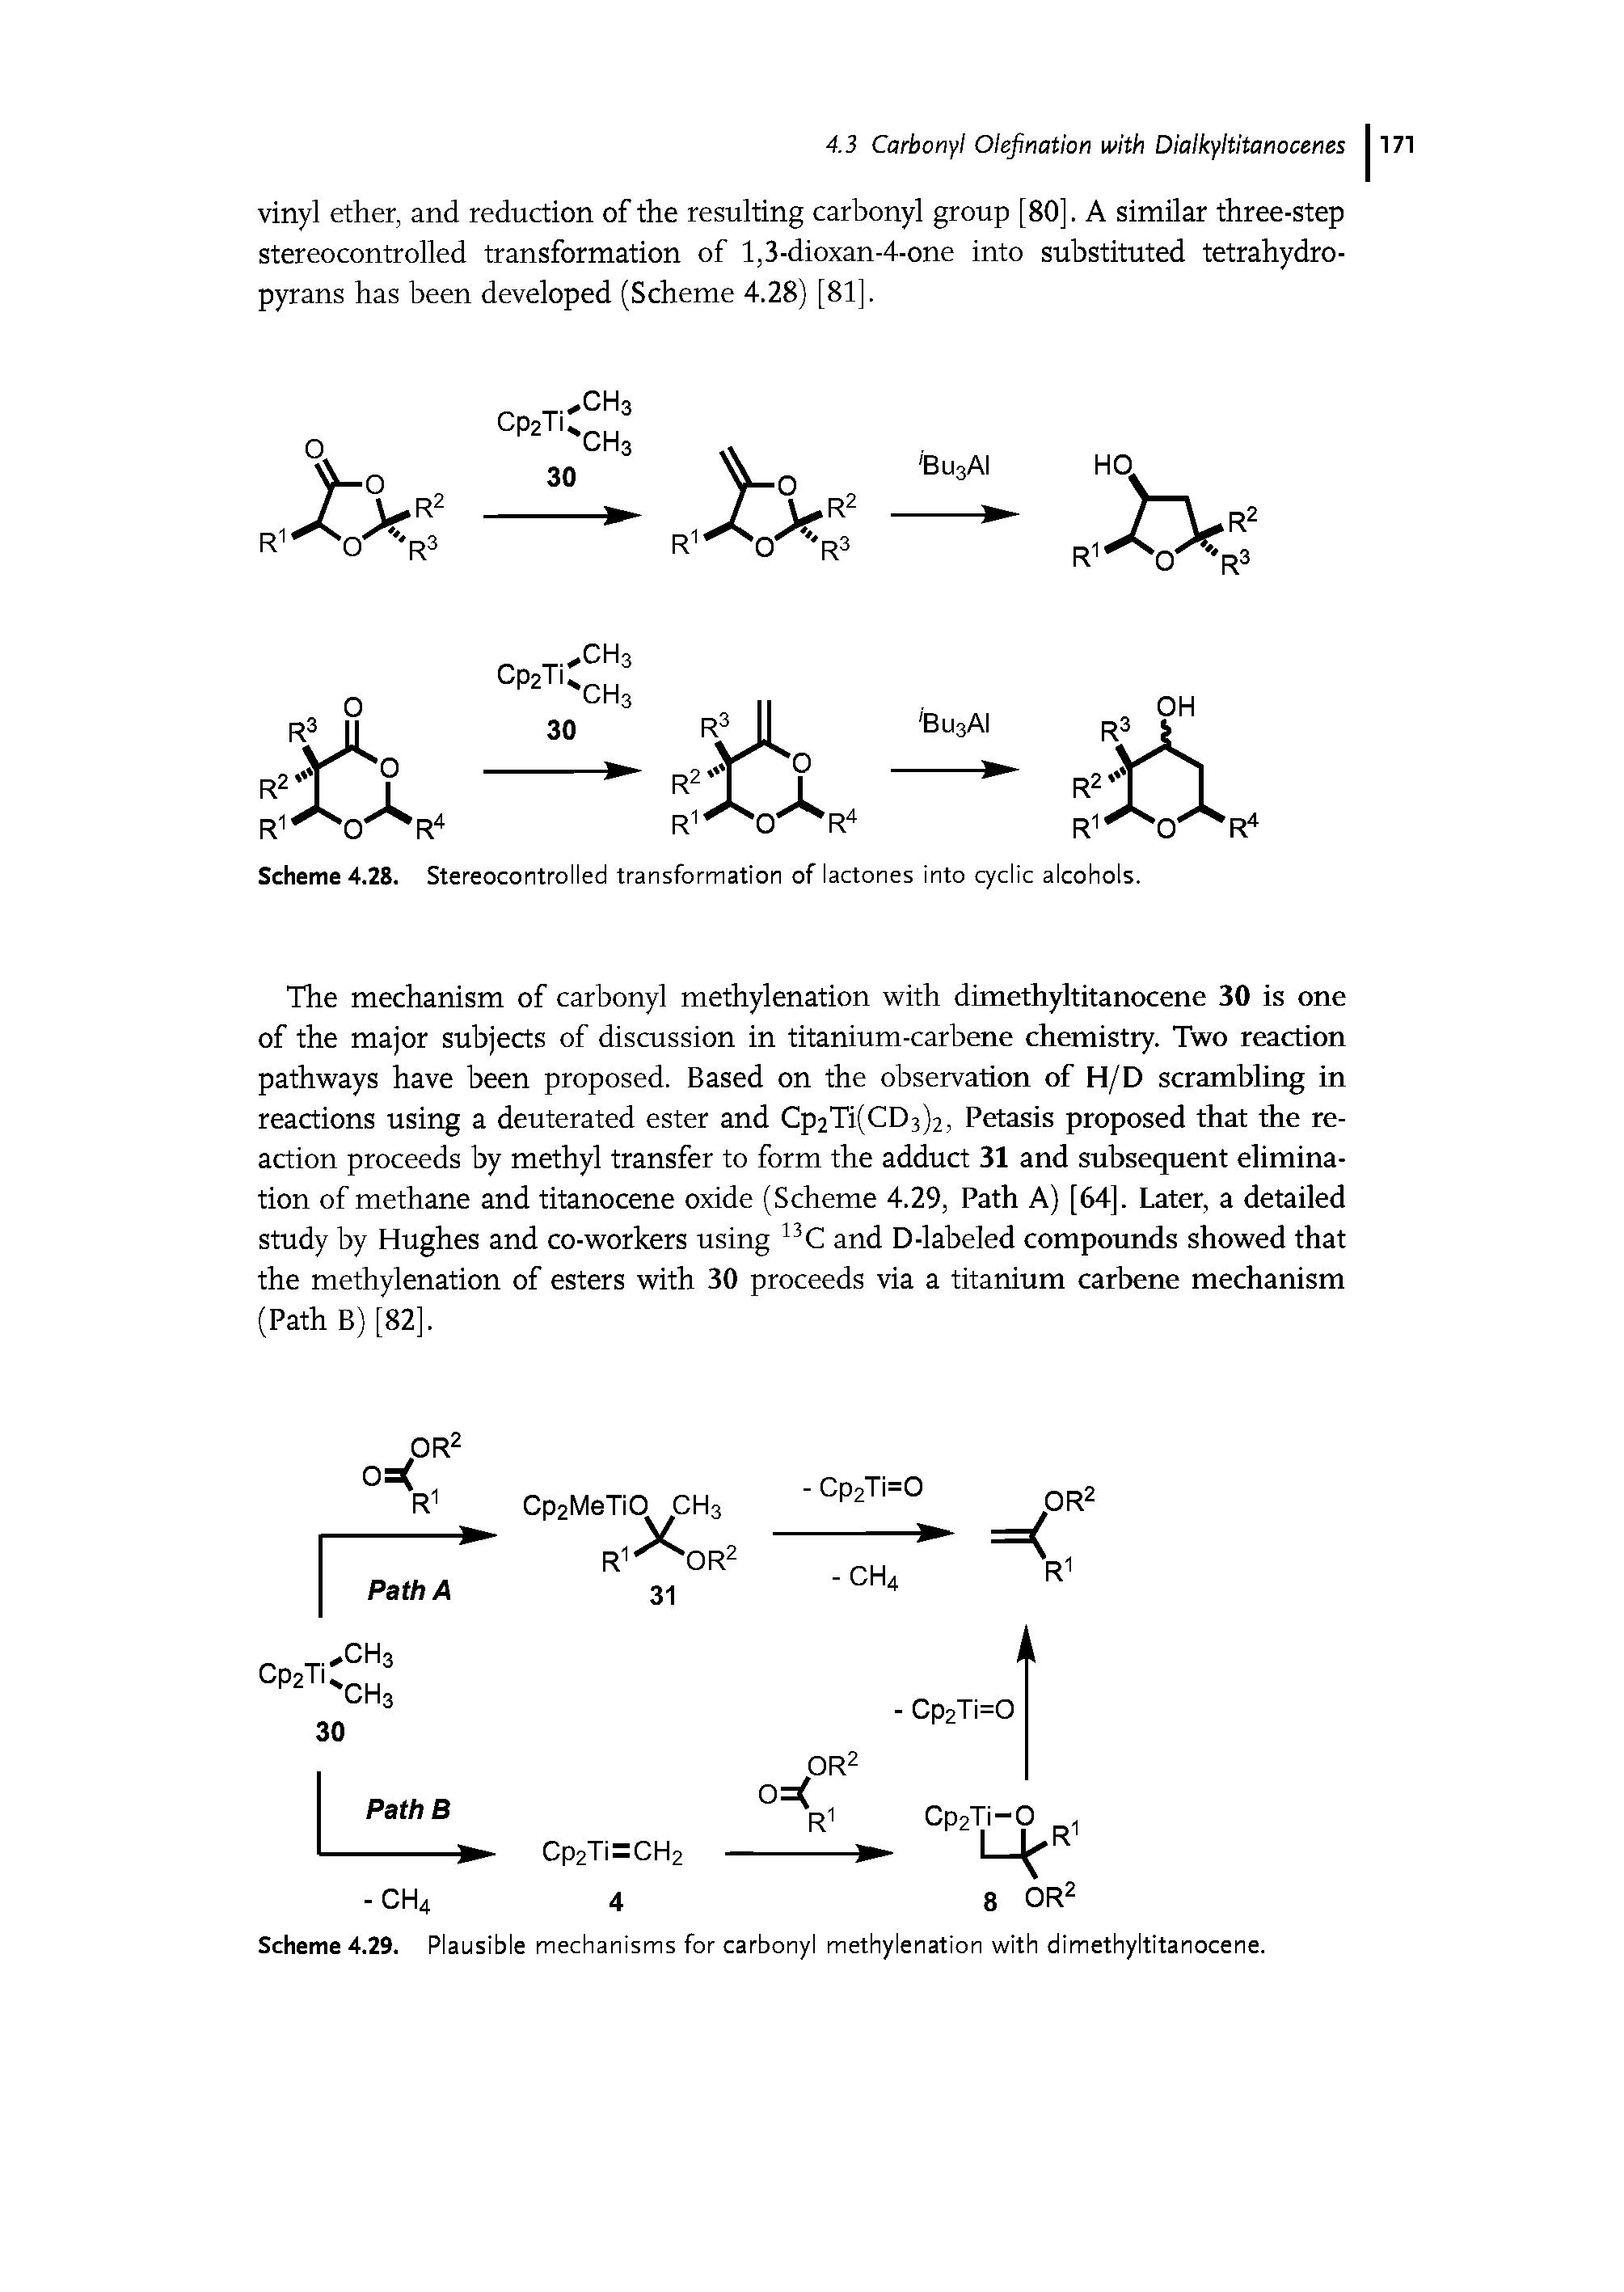 Scheme 4.29. Plausible mechanisms for carbonyl methylenation with dimethyltitanocene.